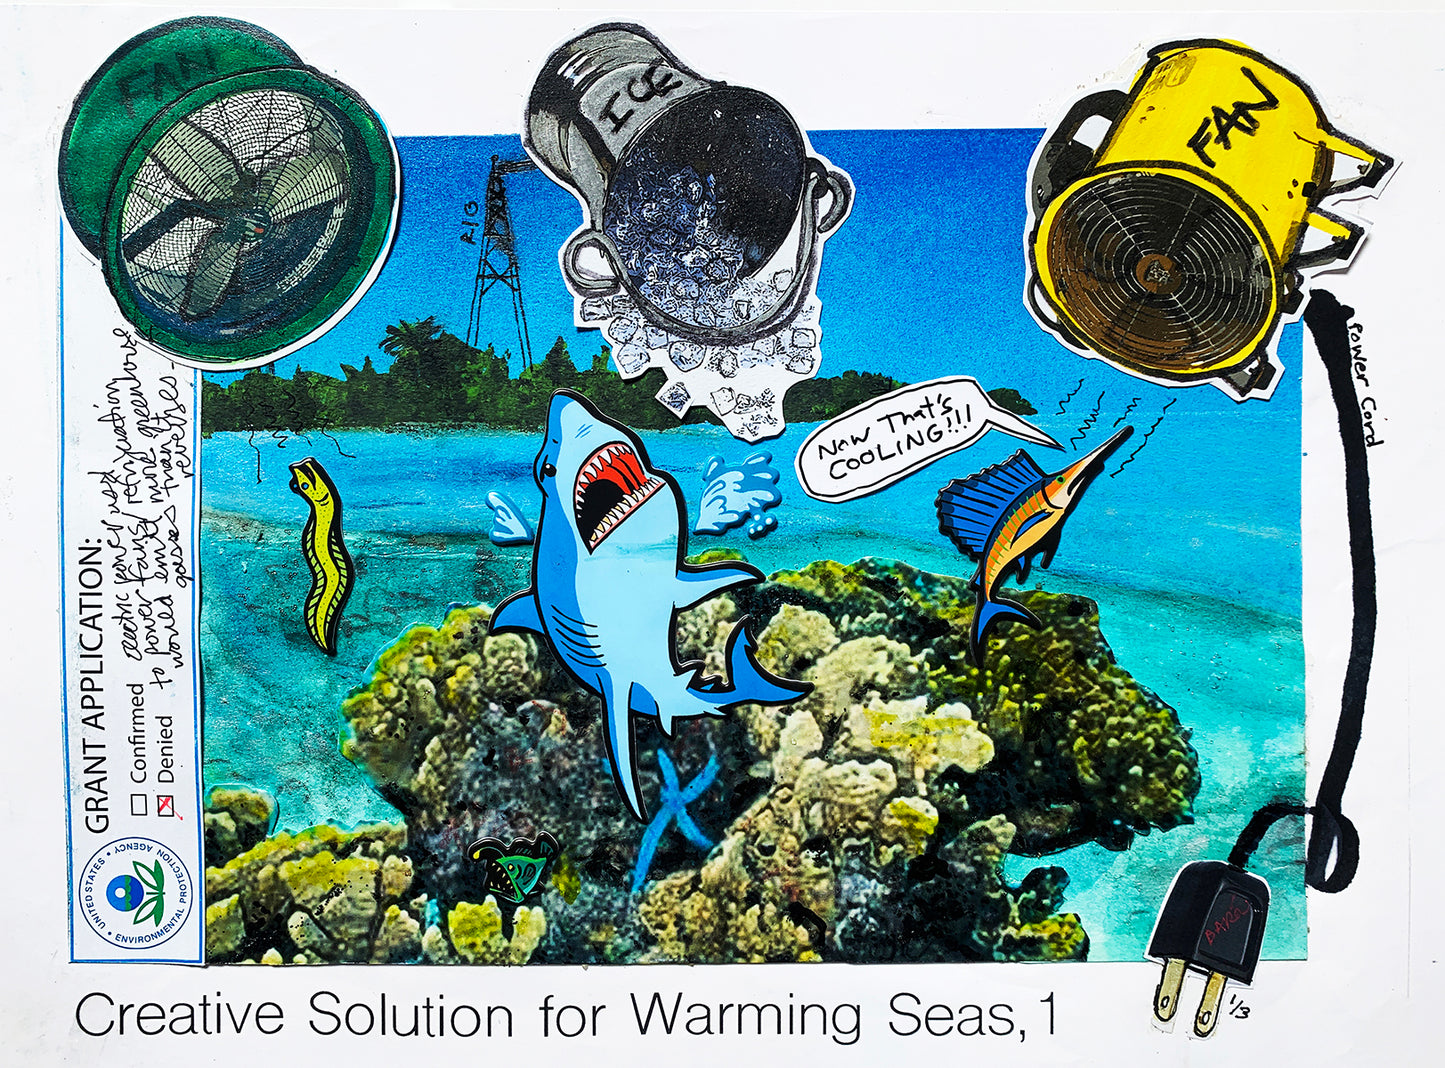 Creative Solution to Warming Seas, I